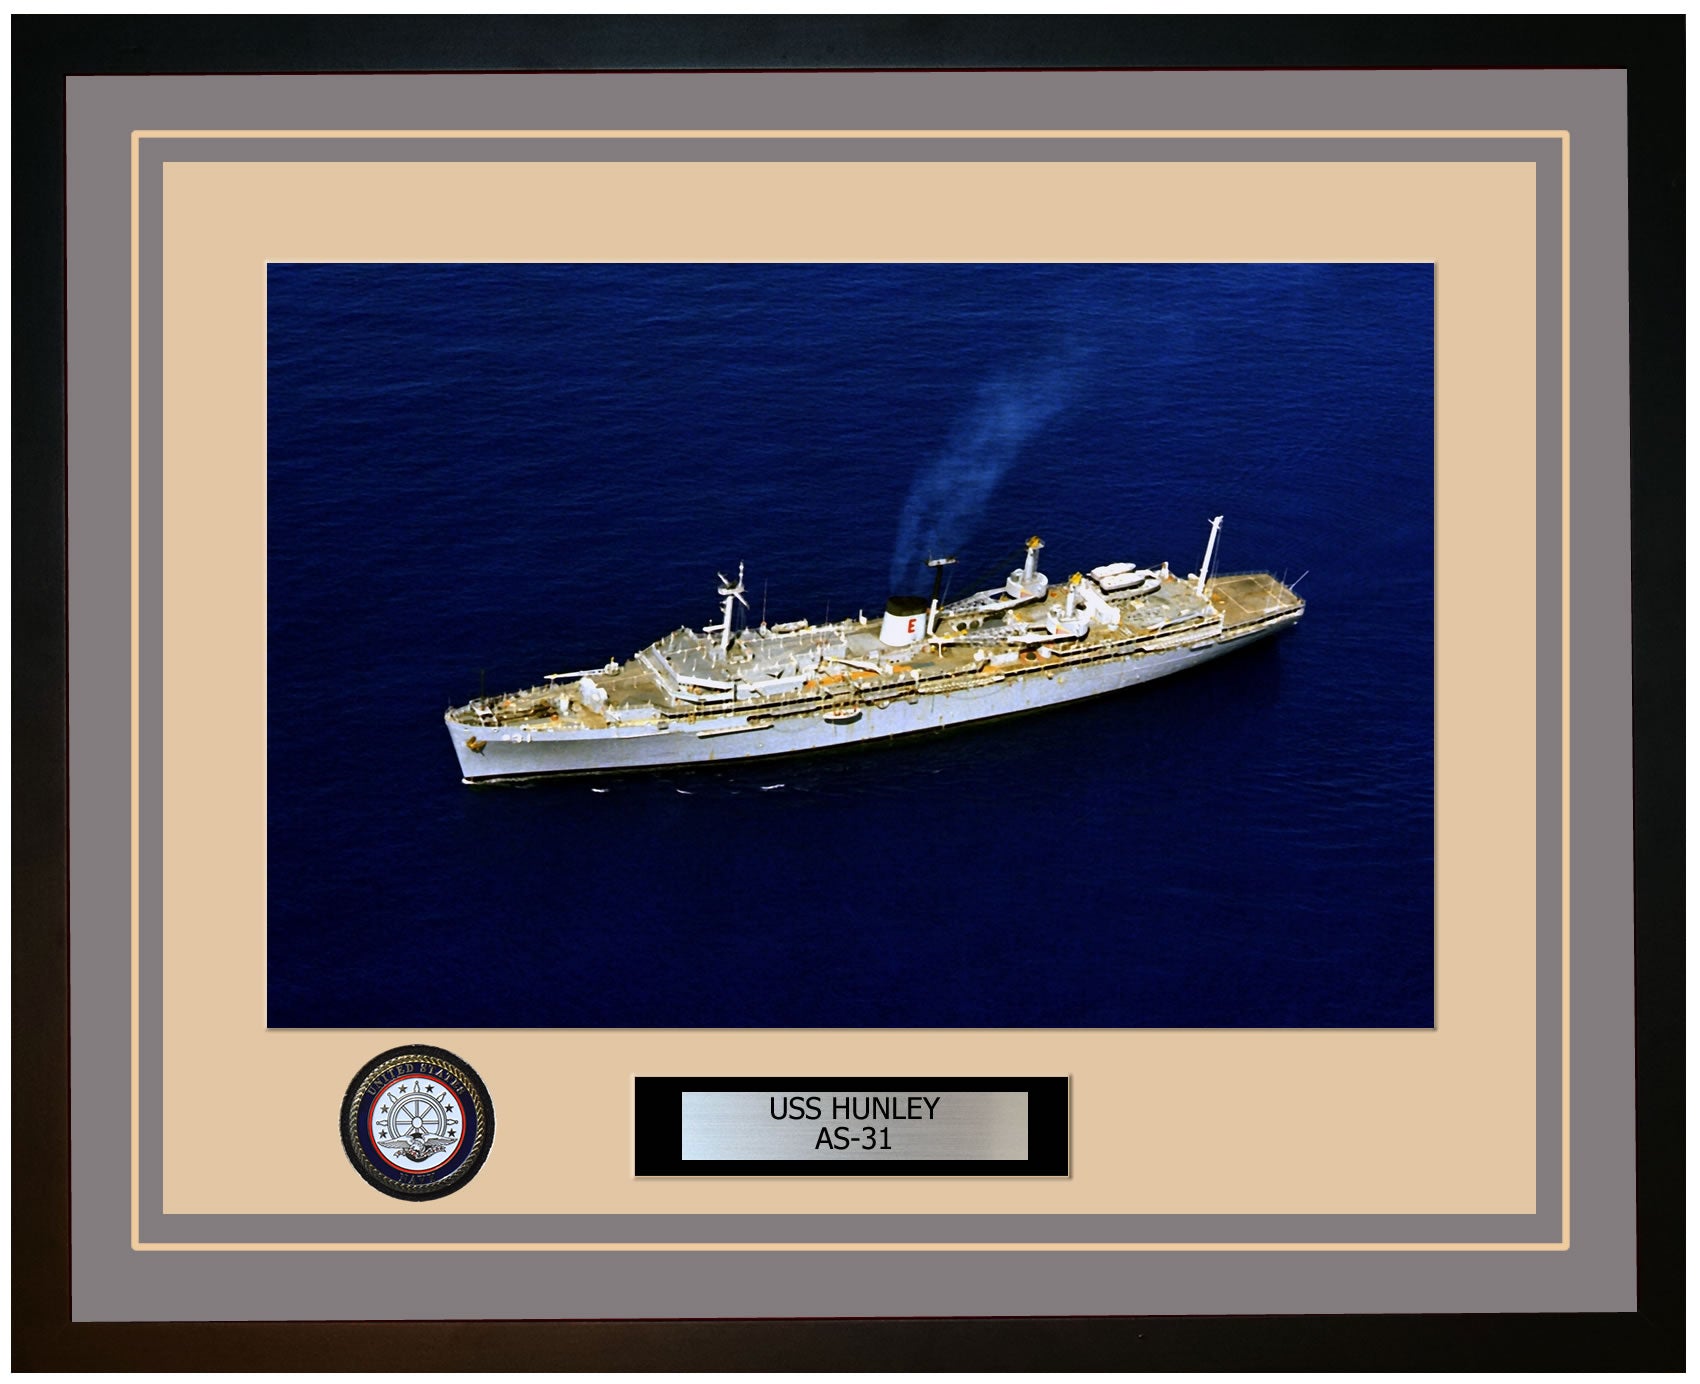 USS HUNLEY AS-31 Framed Navy Ship Photo Grey